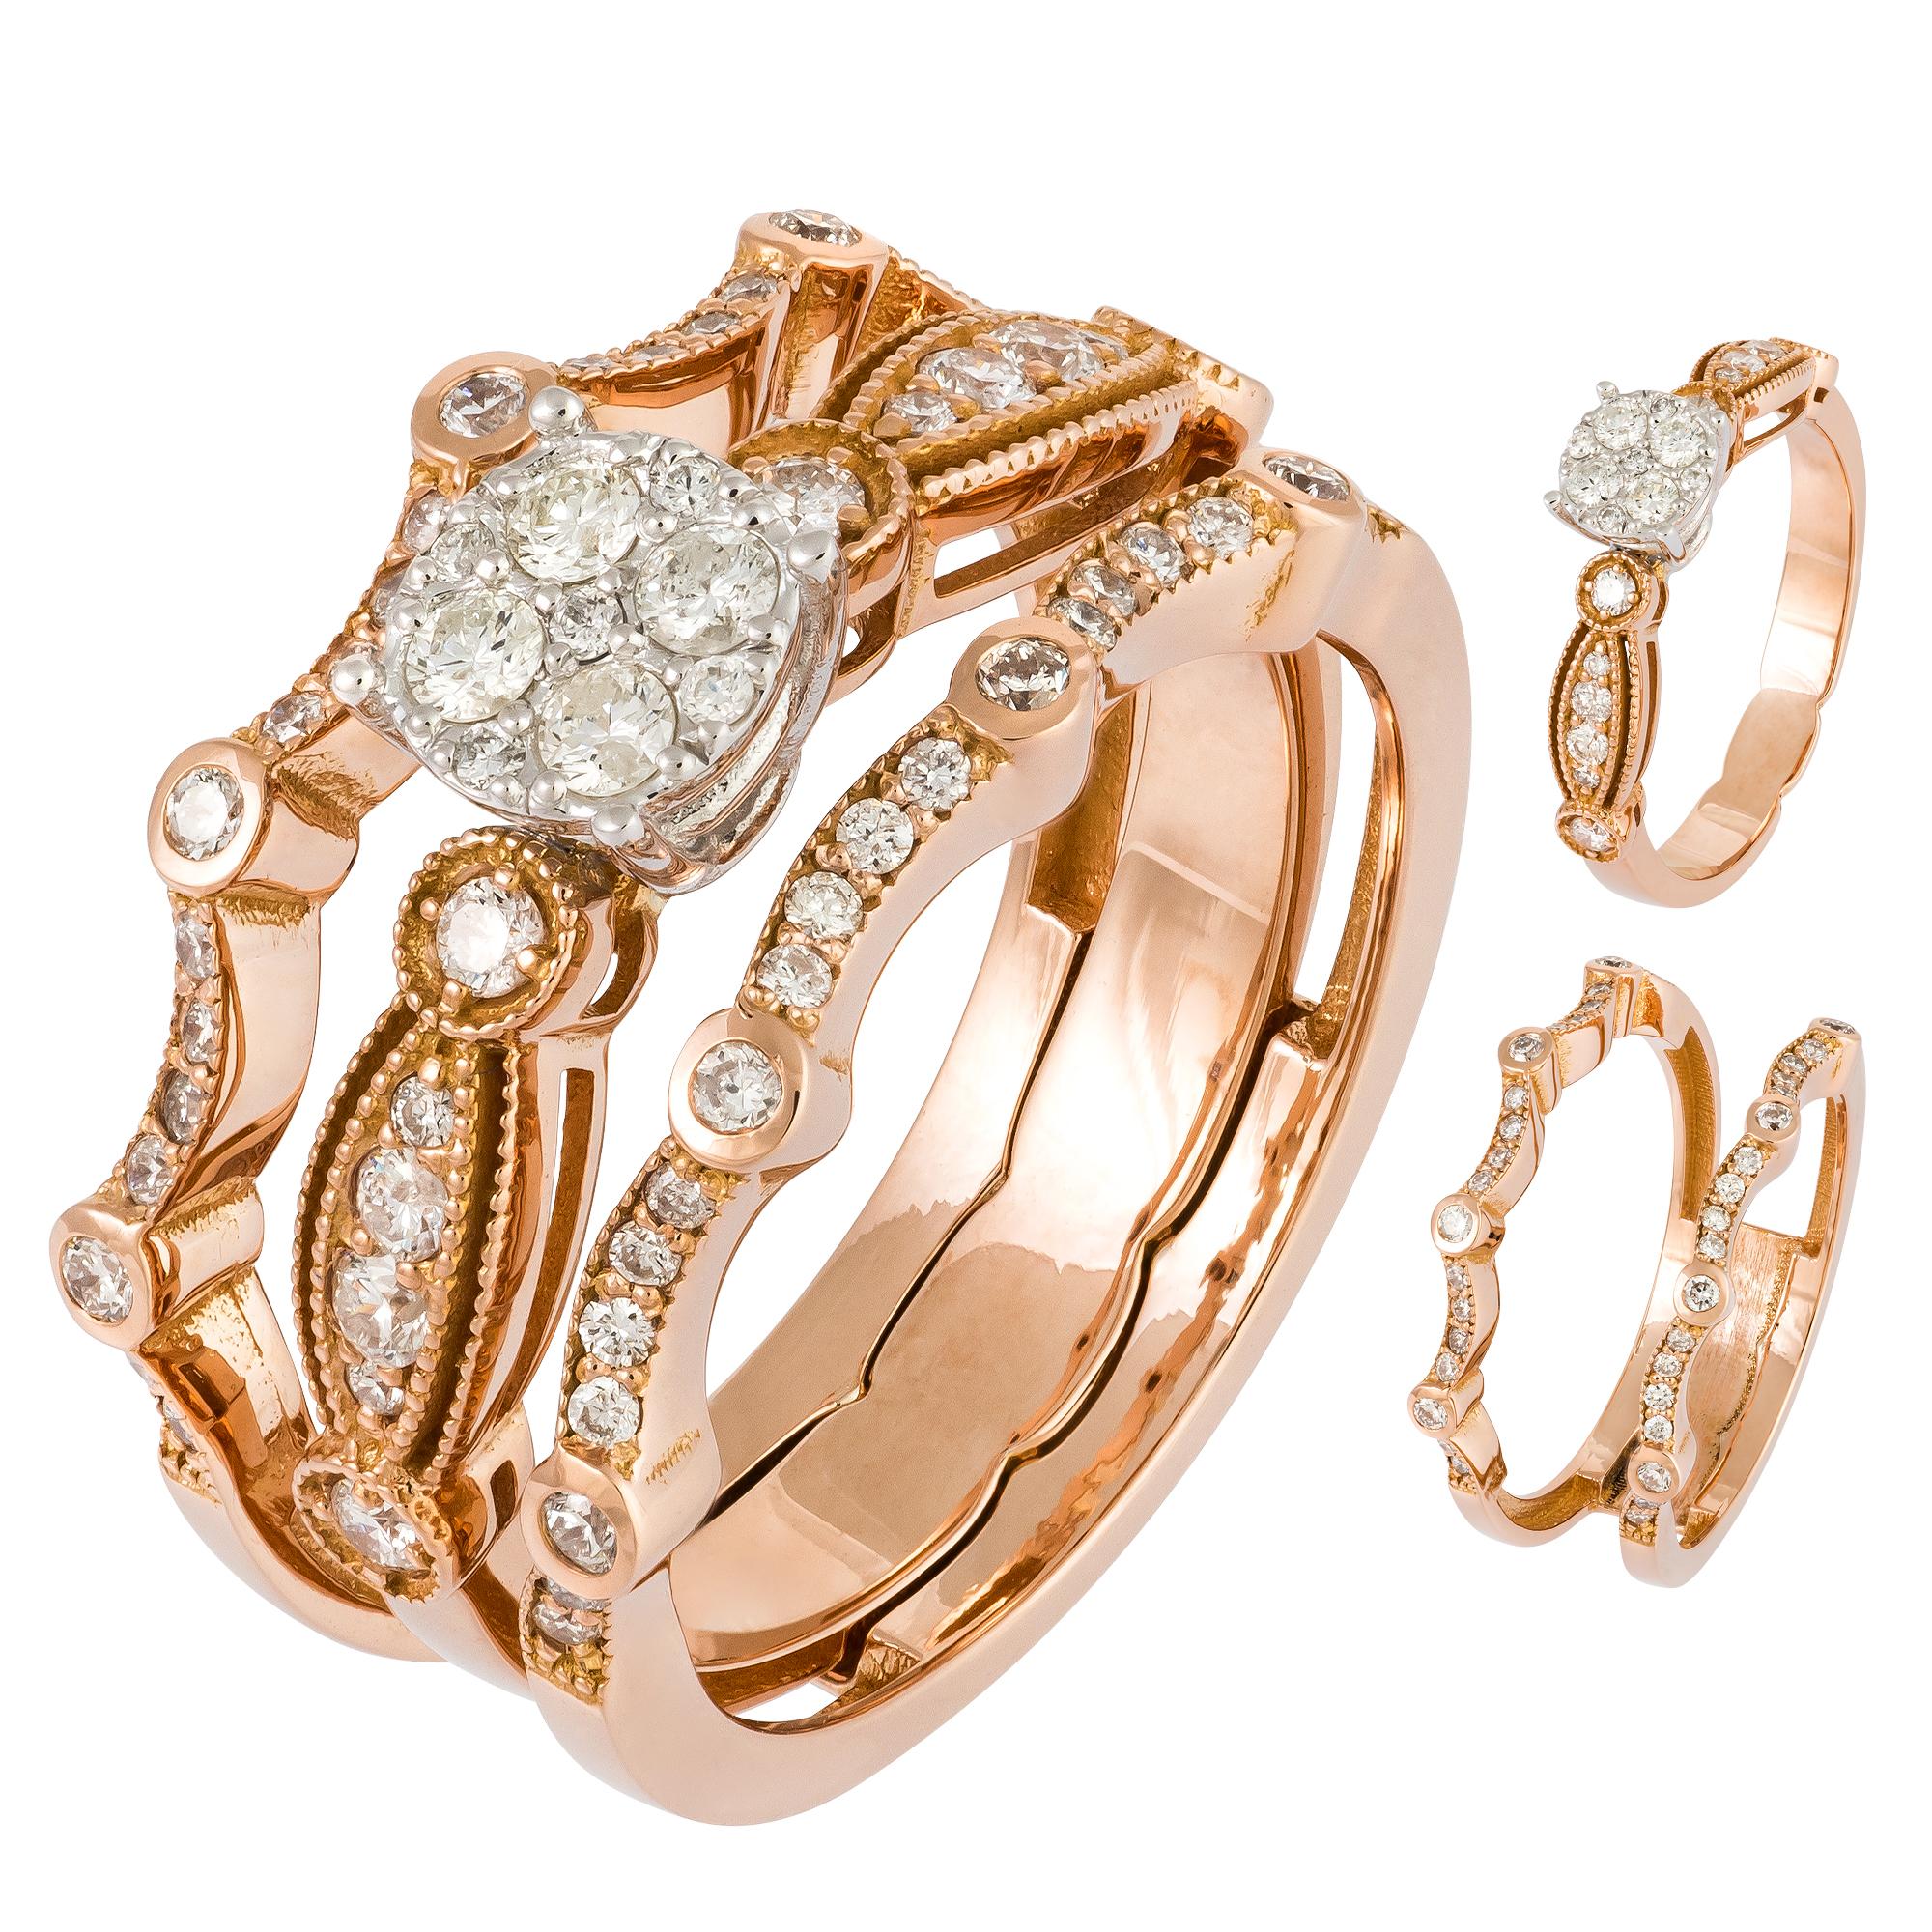 For Sale:  Impressive Pink 18K Gold White Diamond Ring For Her 3